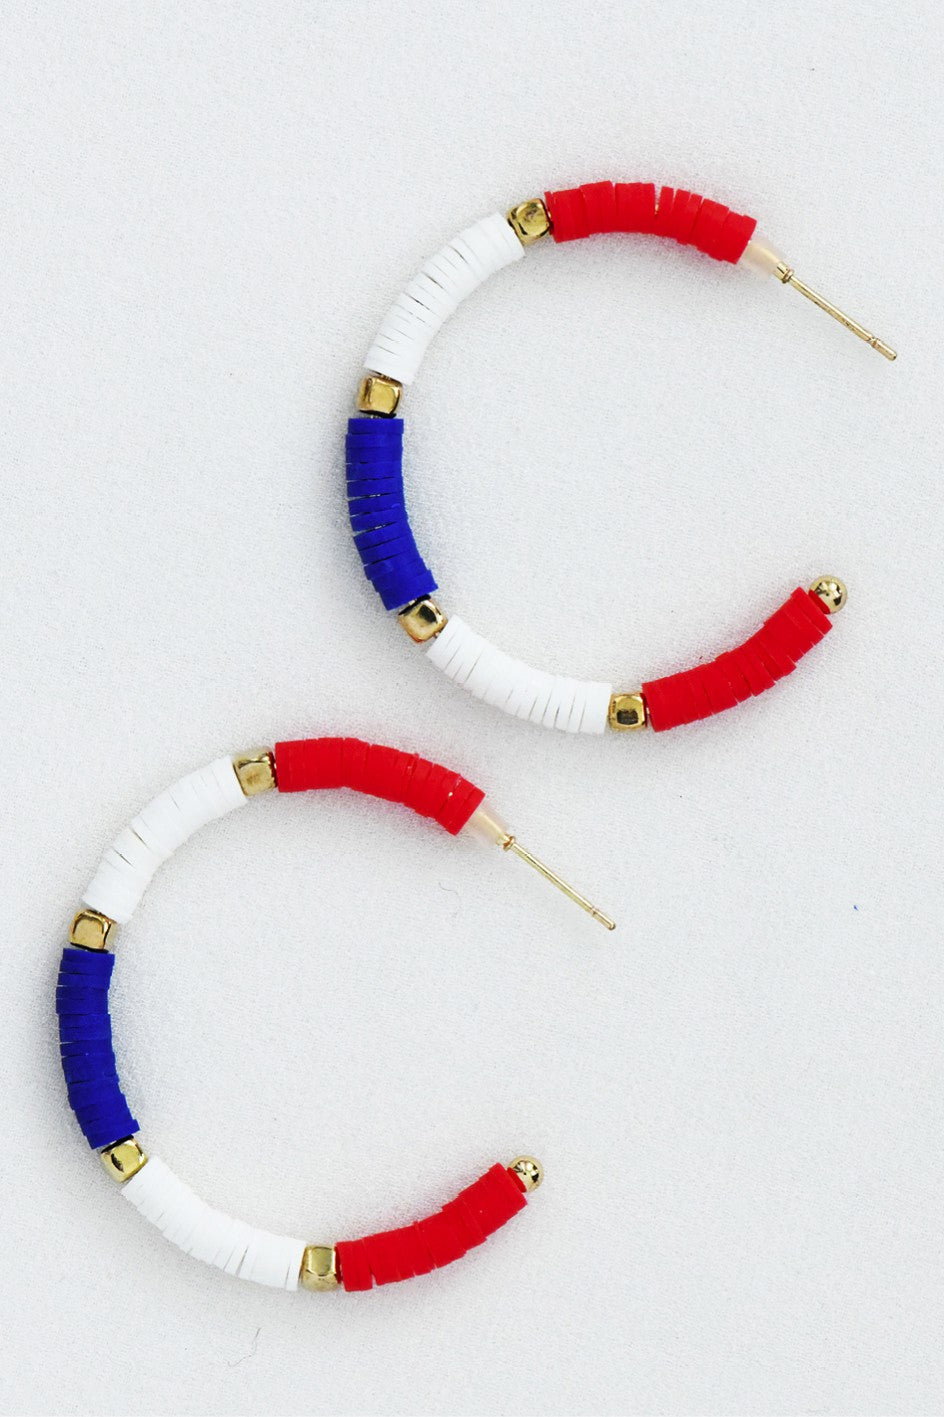 Americana Patriotic Red White Blue Bead Earrings